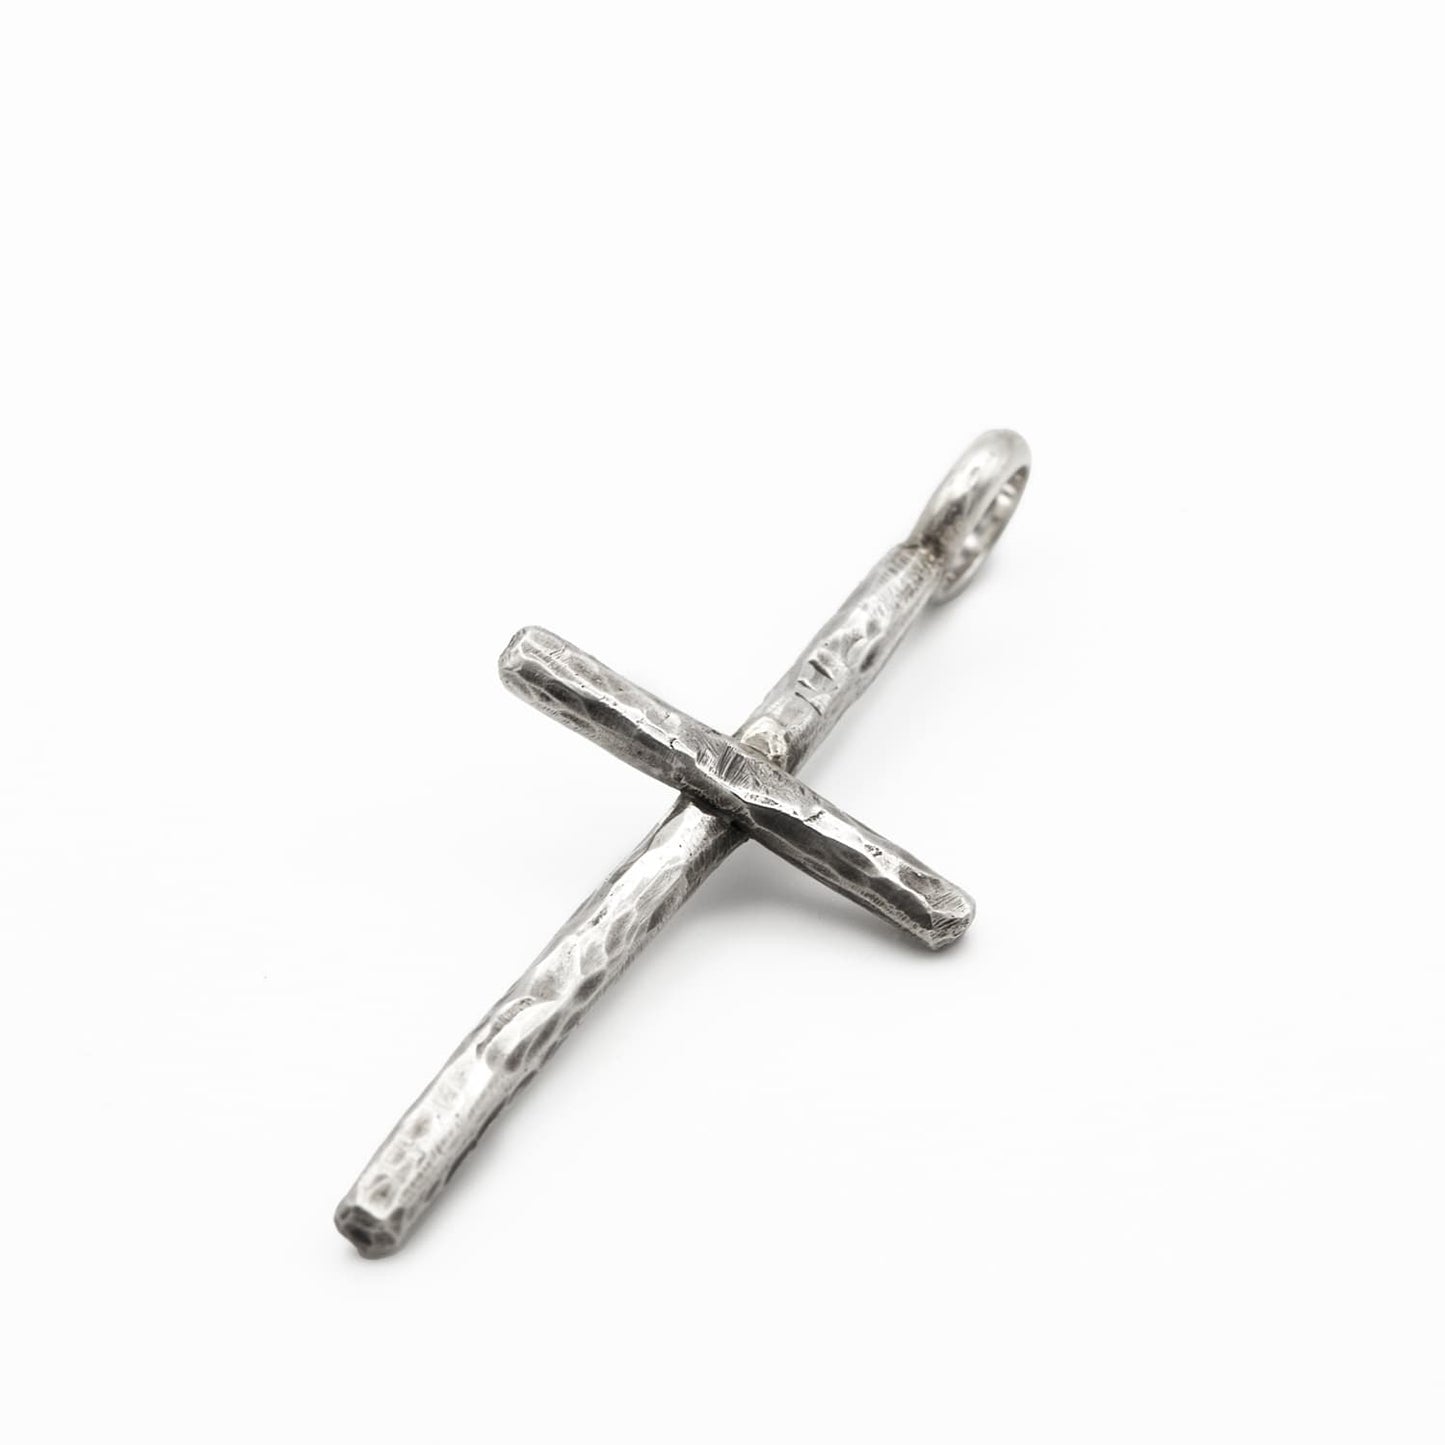 Kreuz aus Sterling Silber - Anhänger für Halskette - massiv geschmiedet - Silberschmied